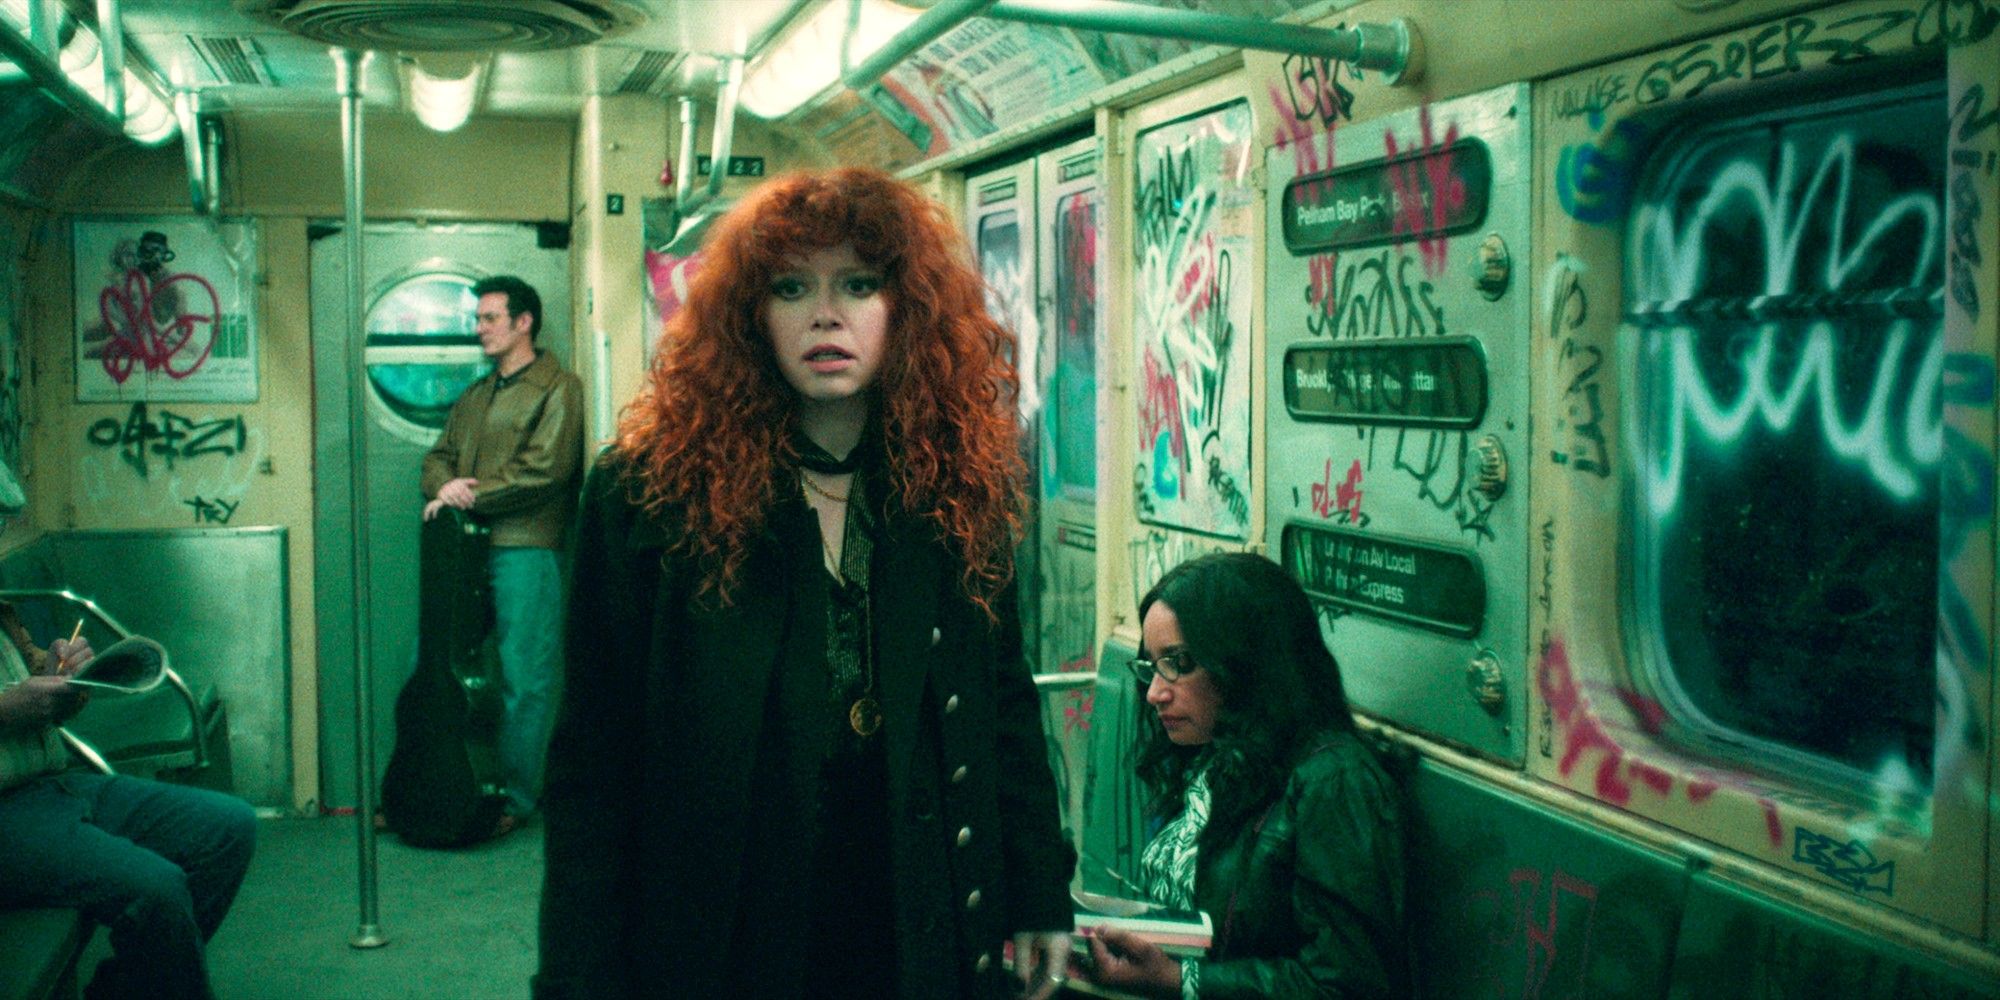 Natasha Lyonne in Russian Doll Season 2 stands in a subway